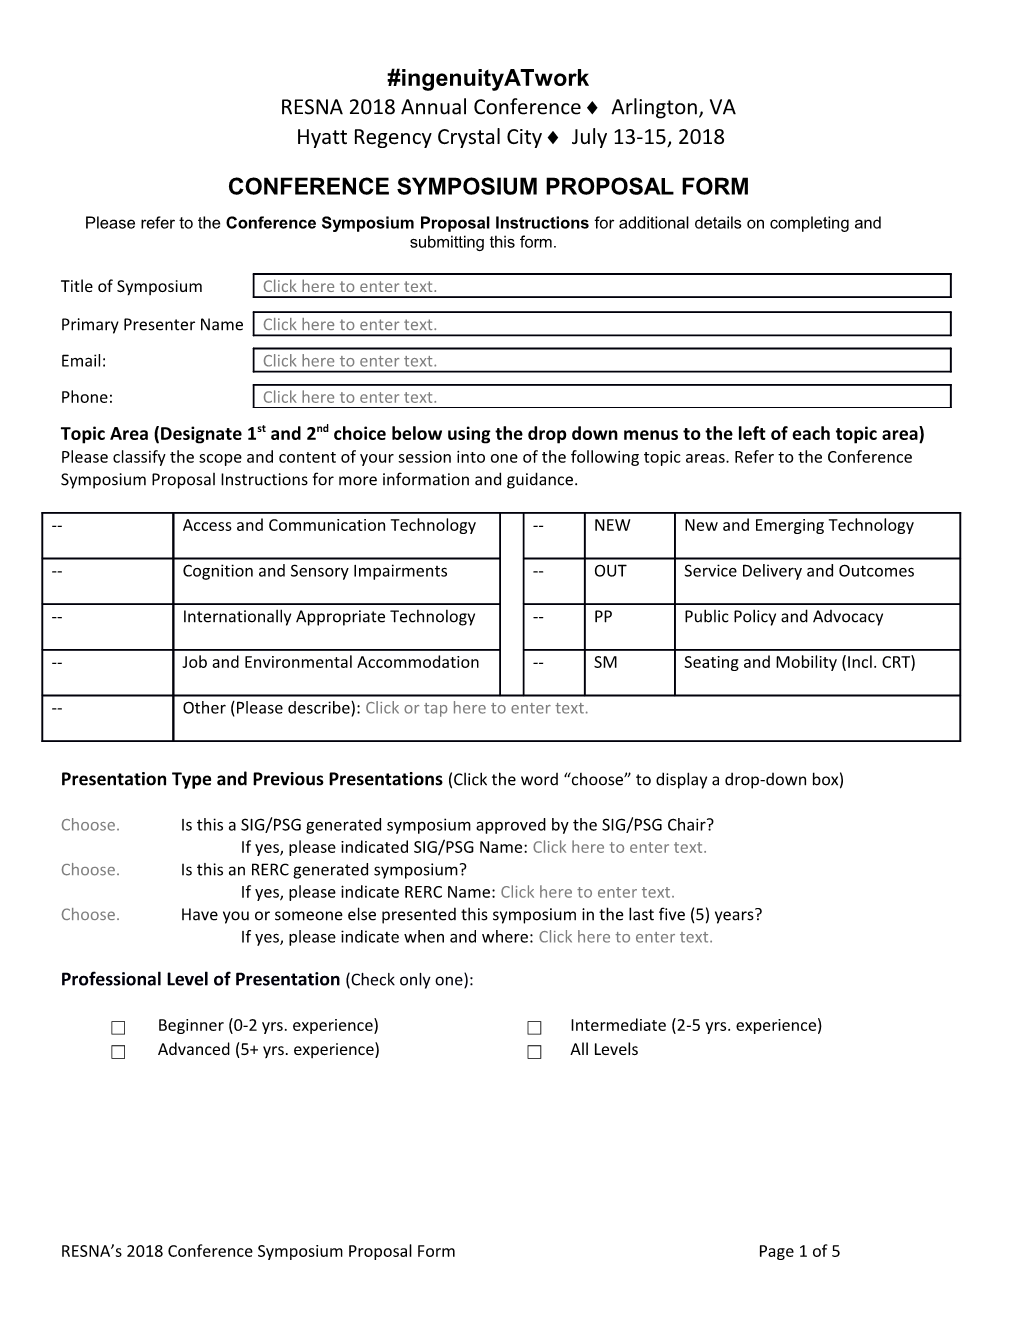 Conference Symposiumproposal Form